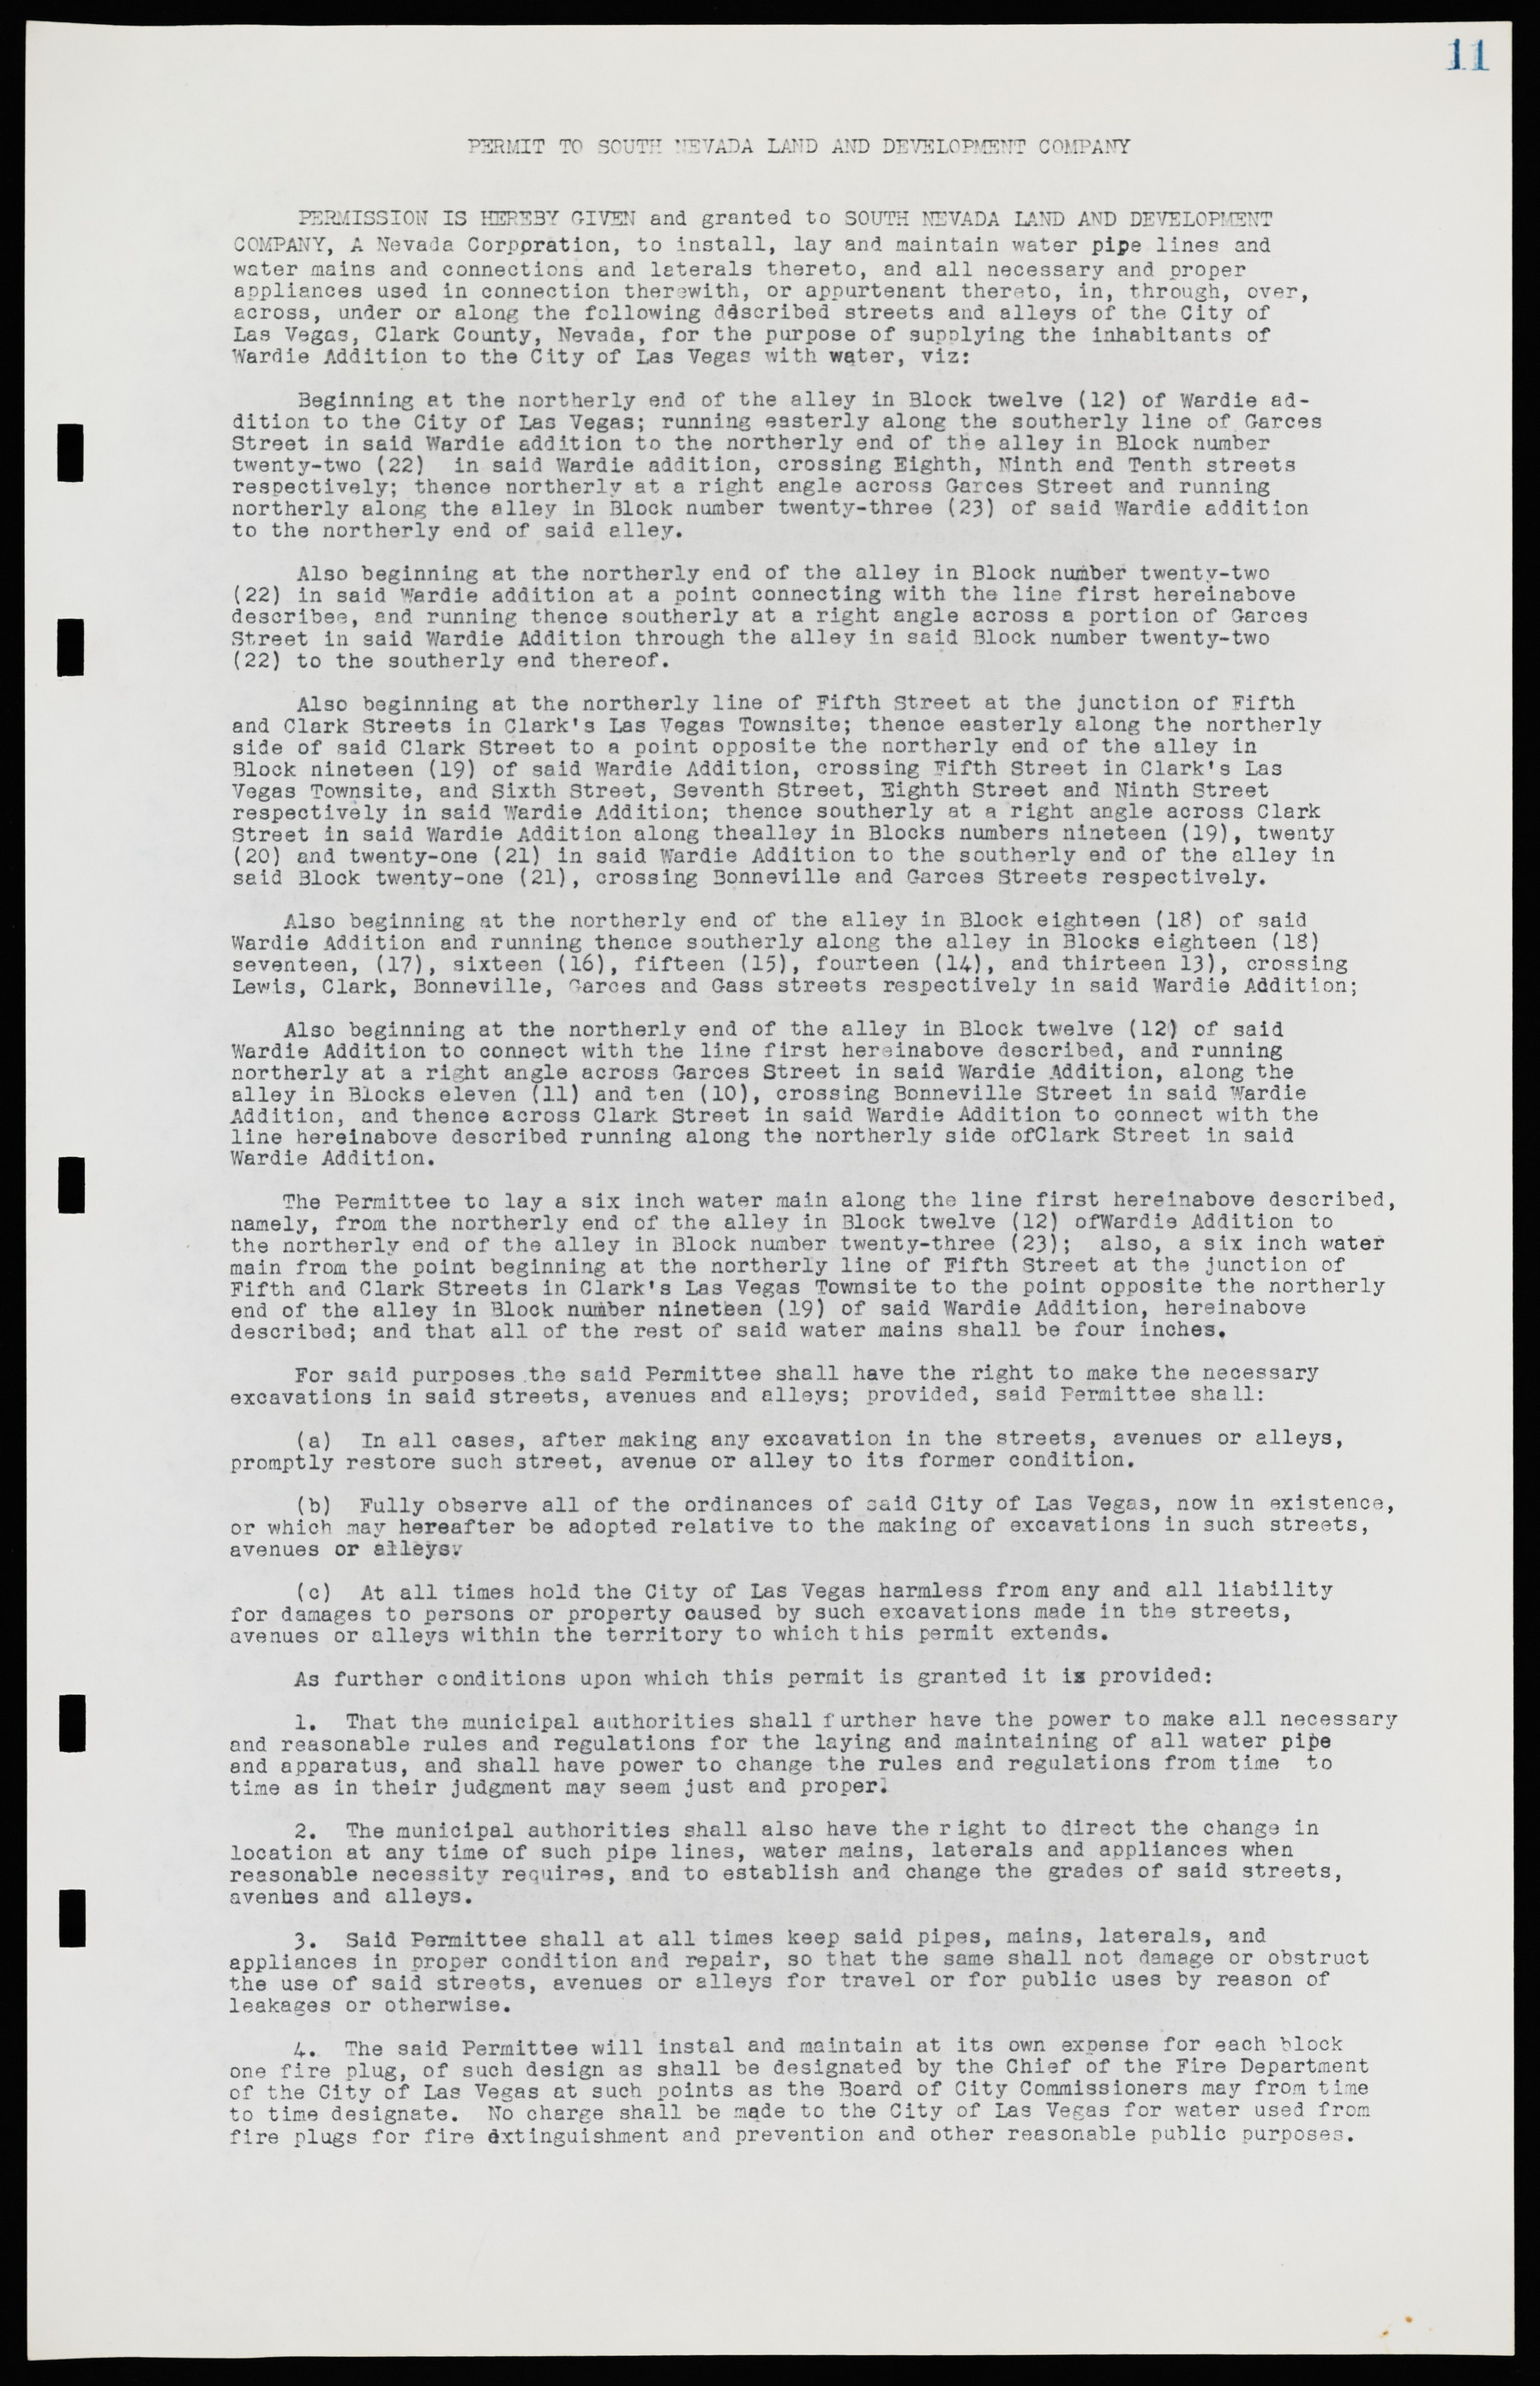 Las Vegas City Commission Legal Documents, February 29, 1944 to February 21, 1945, lvc000016-19